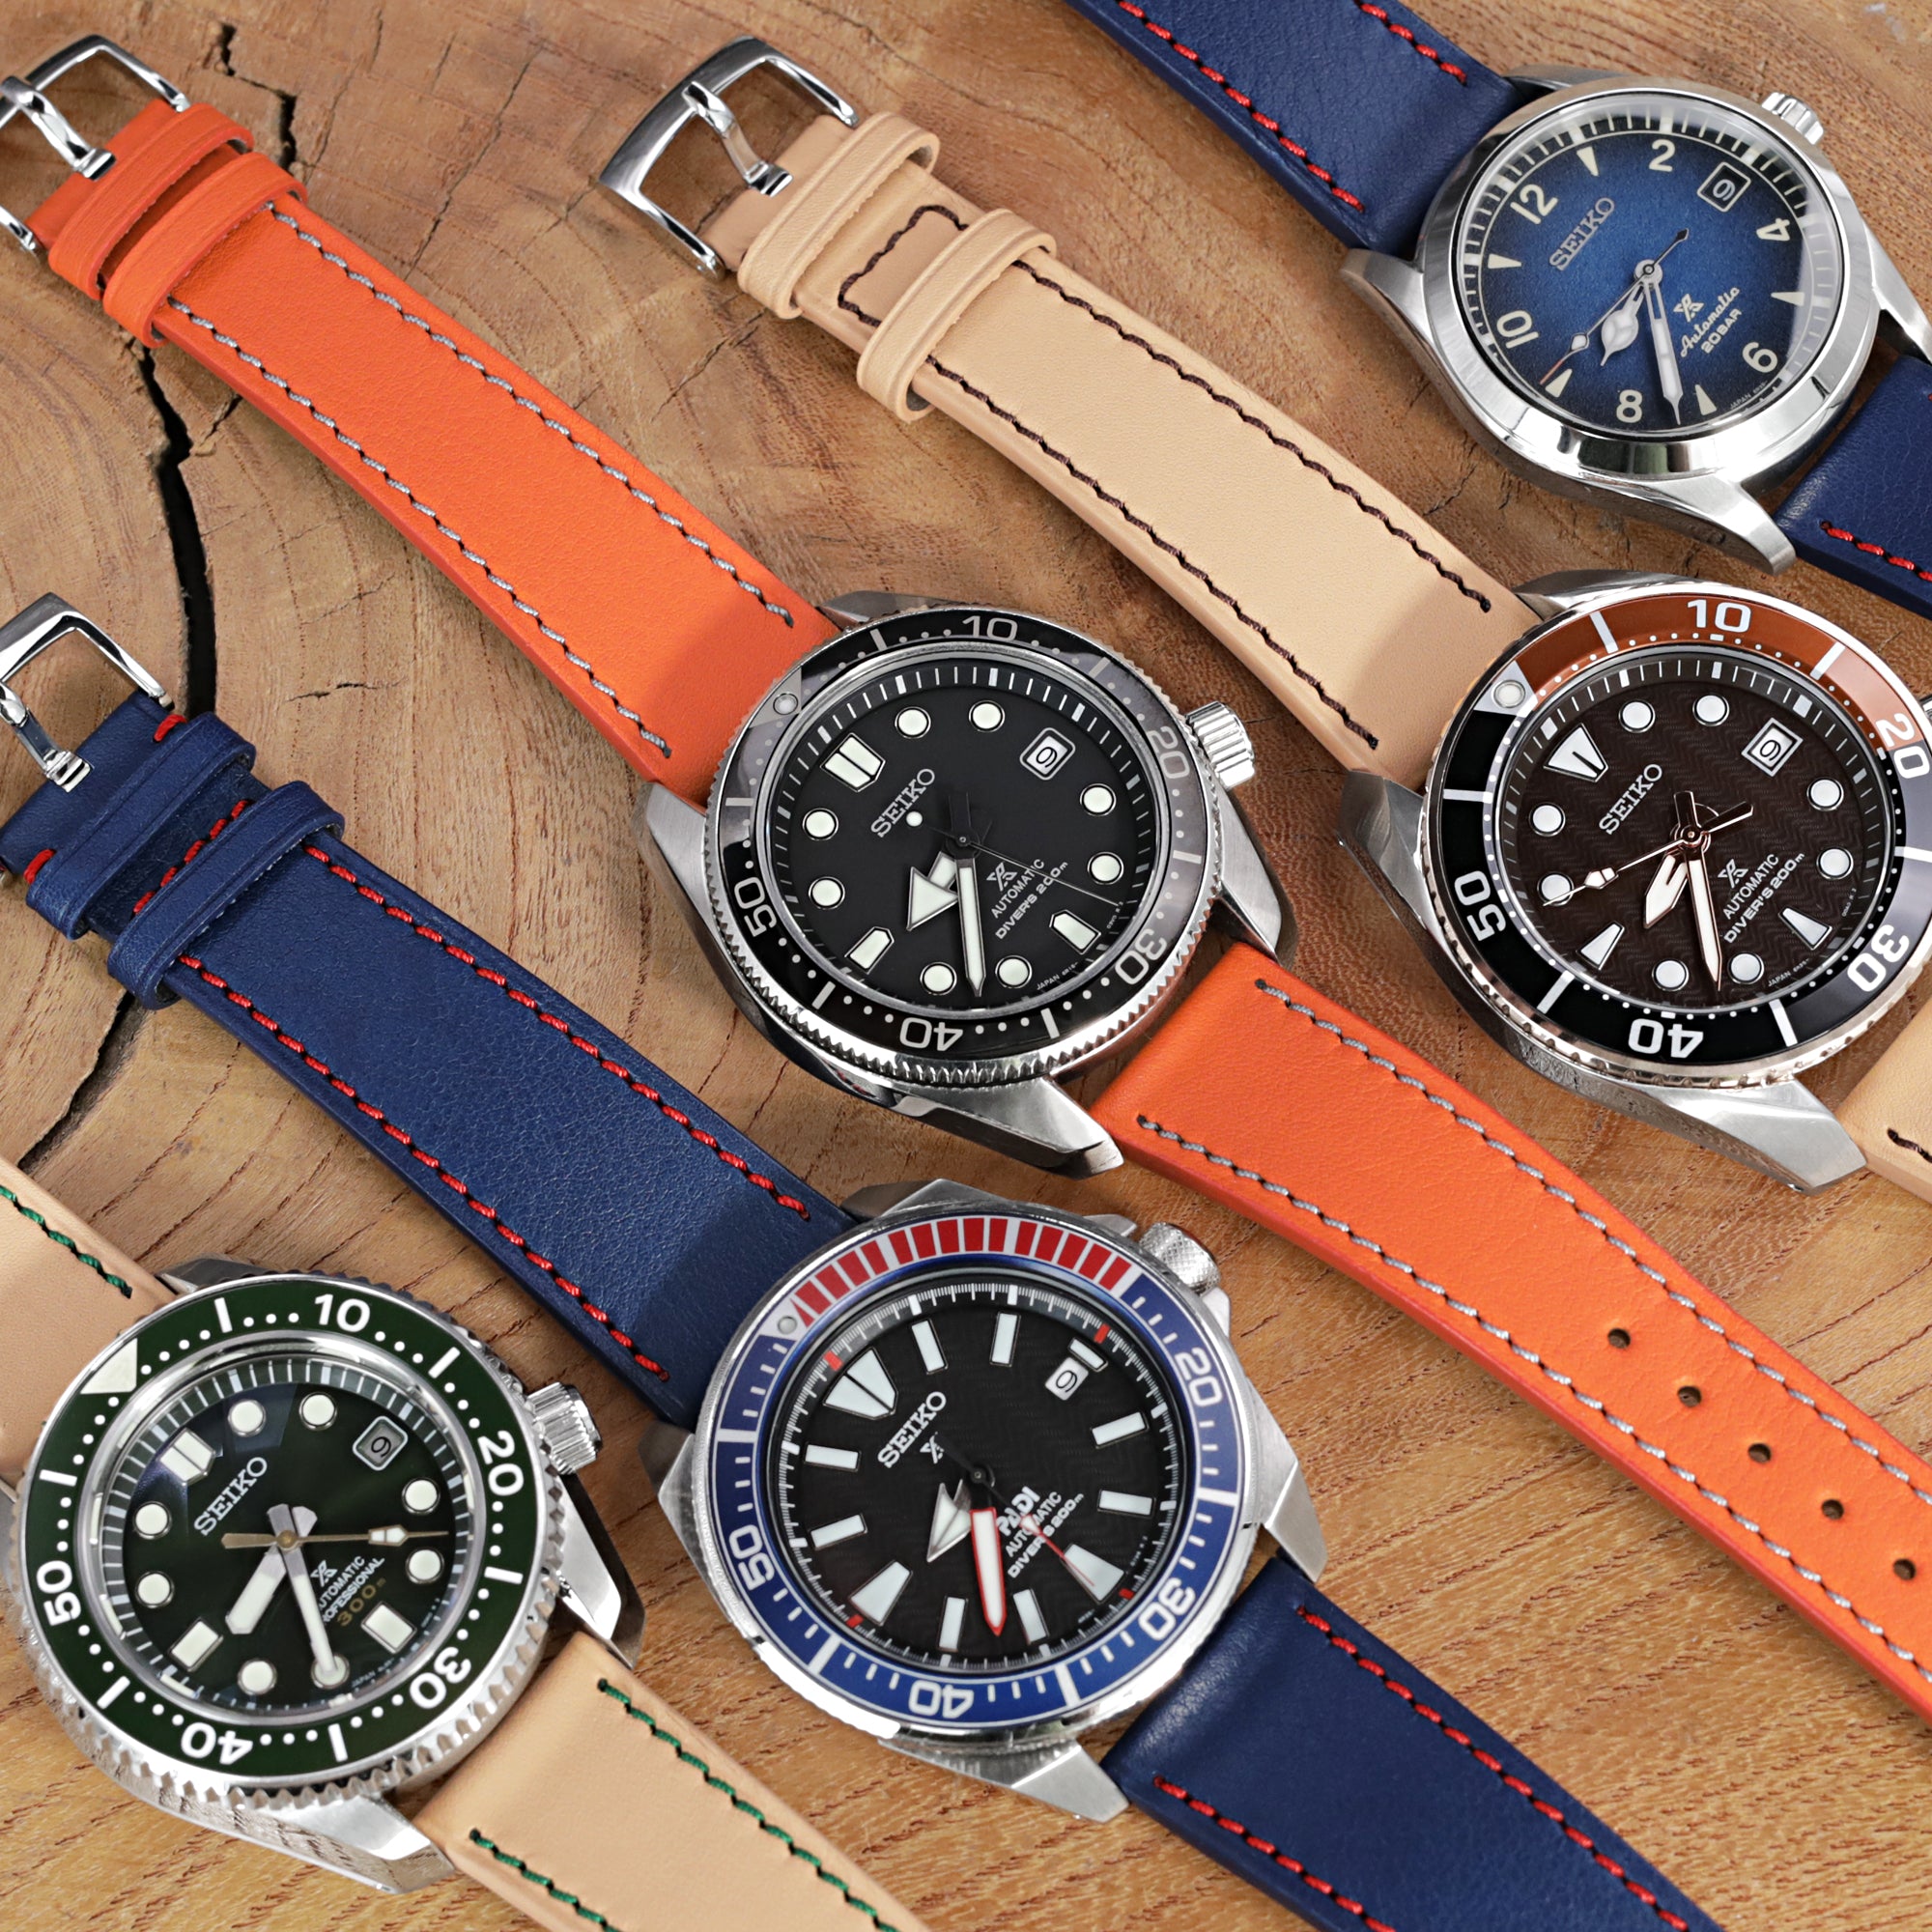 Watch Bands, Watch Straps, Upgrade your Seiko watch